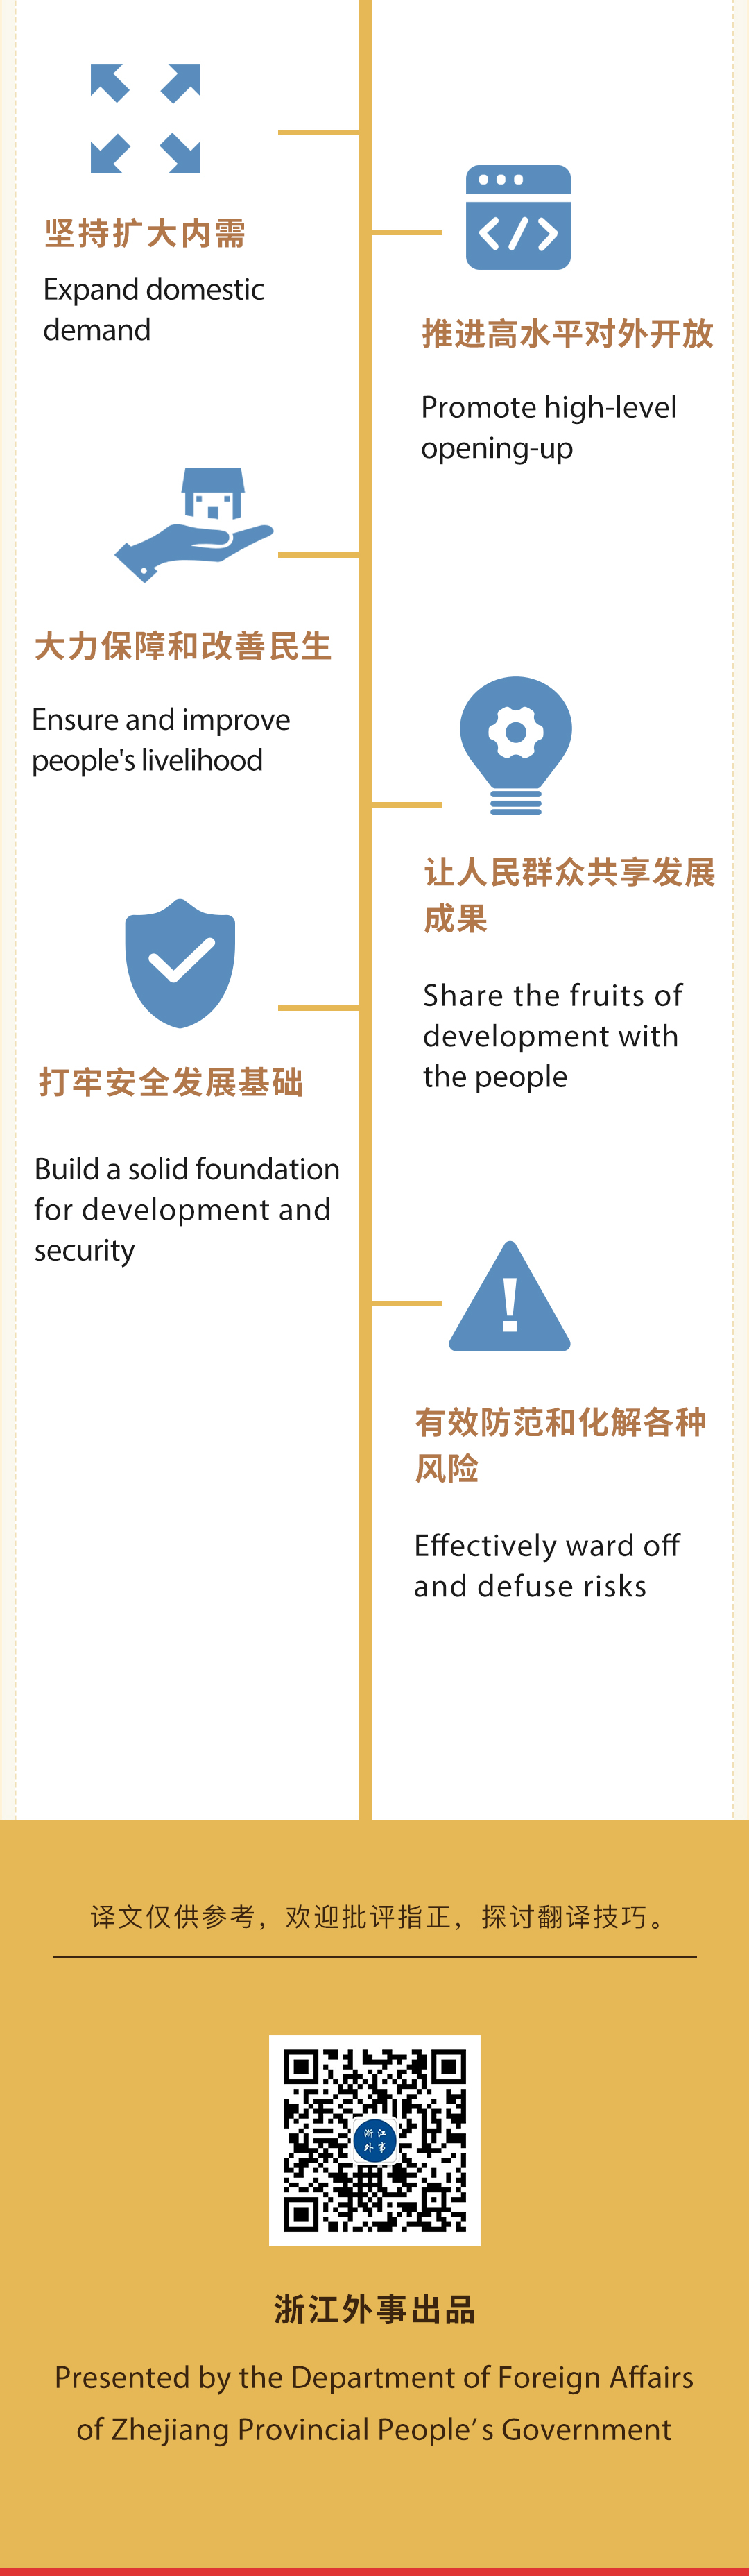 Zhejiang Govt Report 14th Five Year Plan 5.jpg